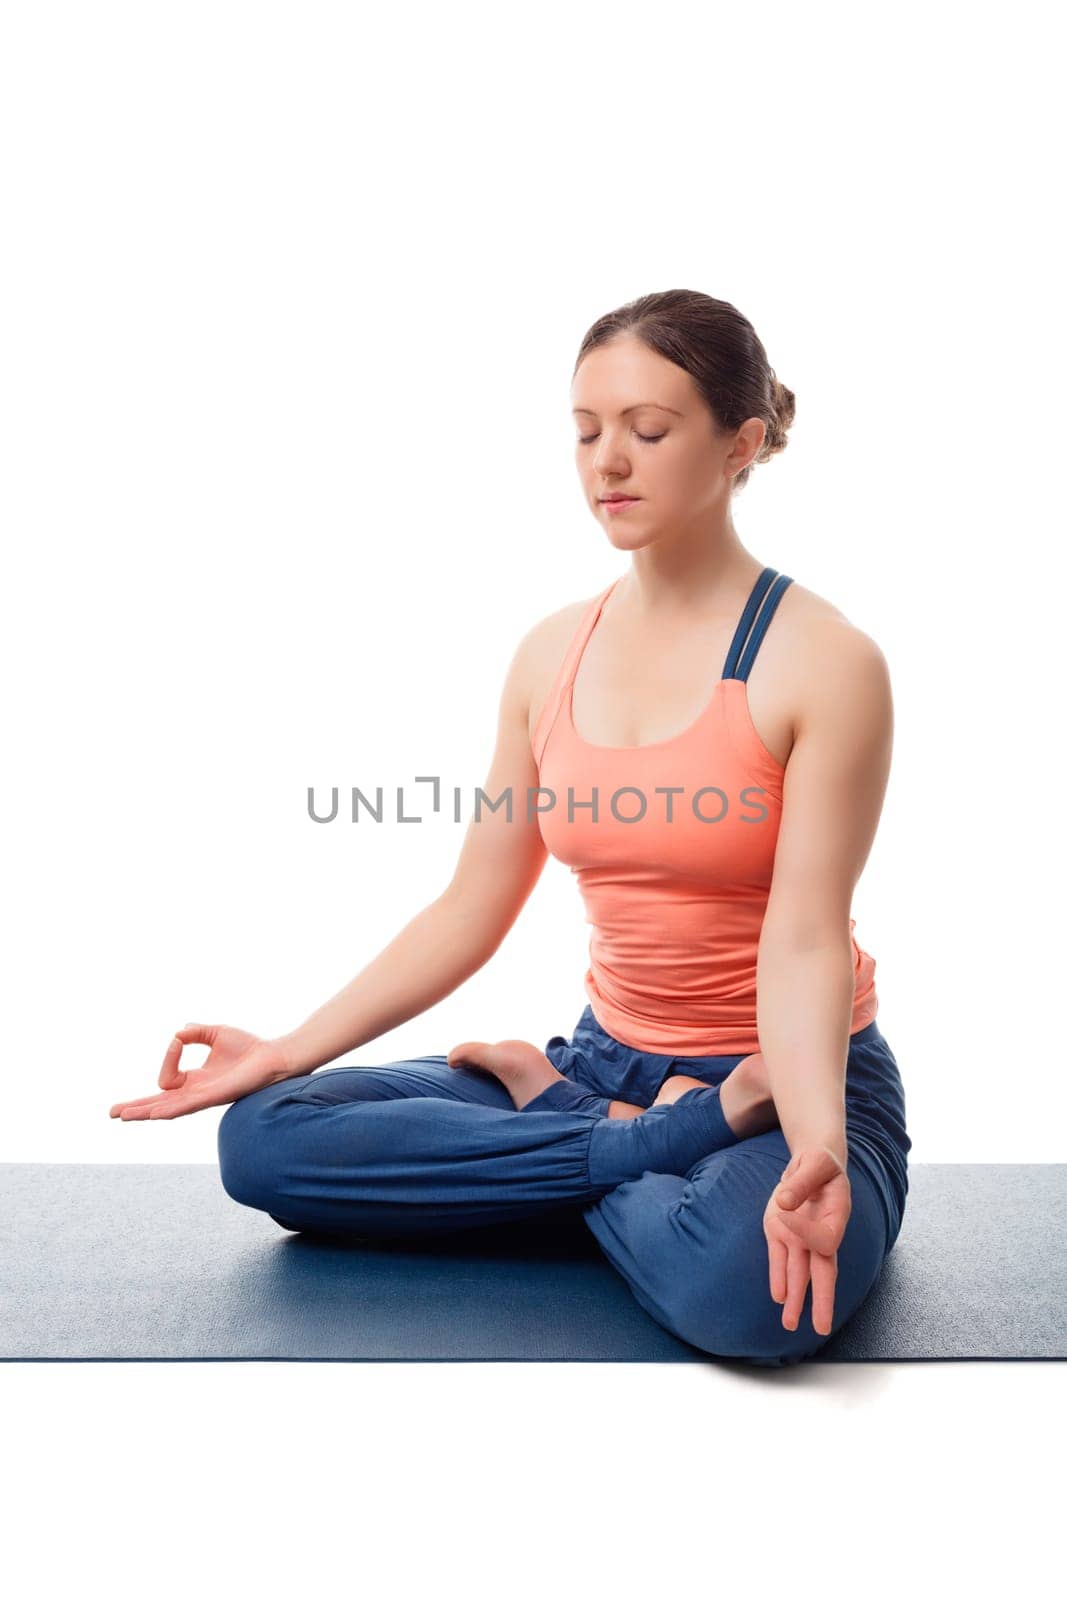 Fit yogini woman meditating in yoga asana Padmasana Lotus pose by dimol